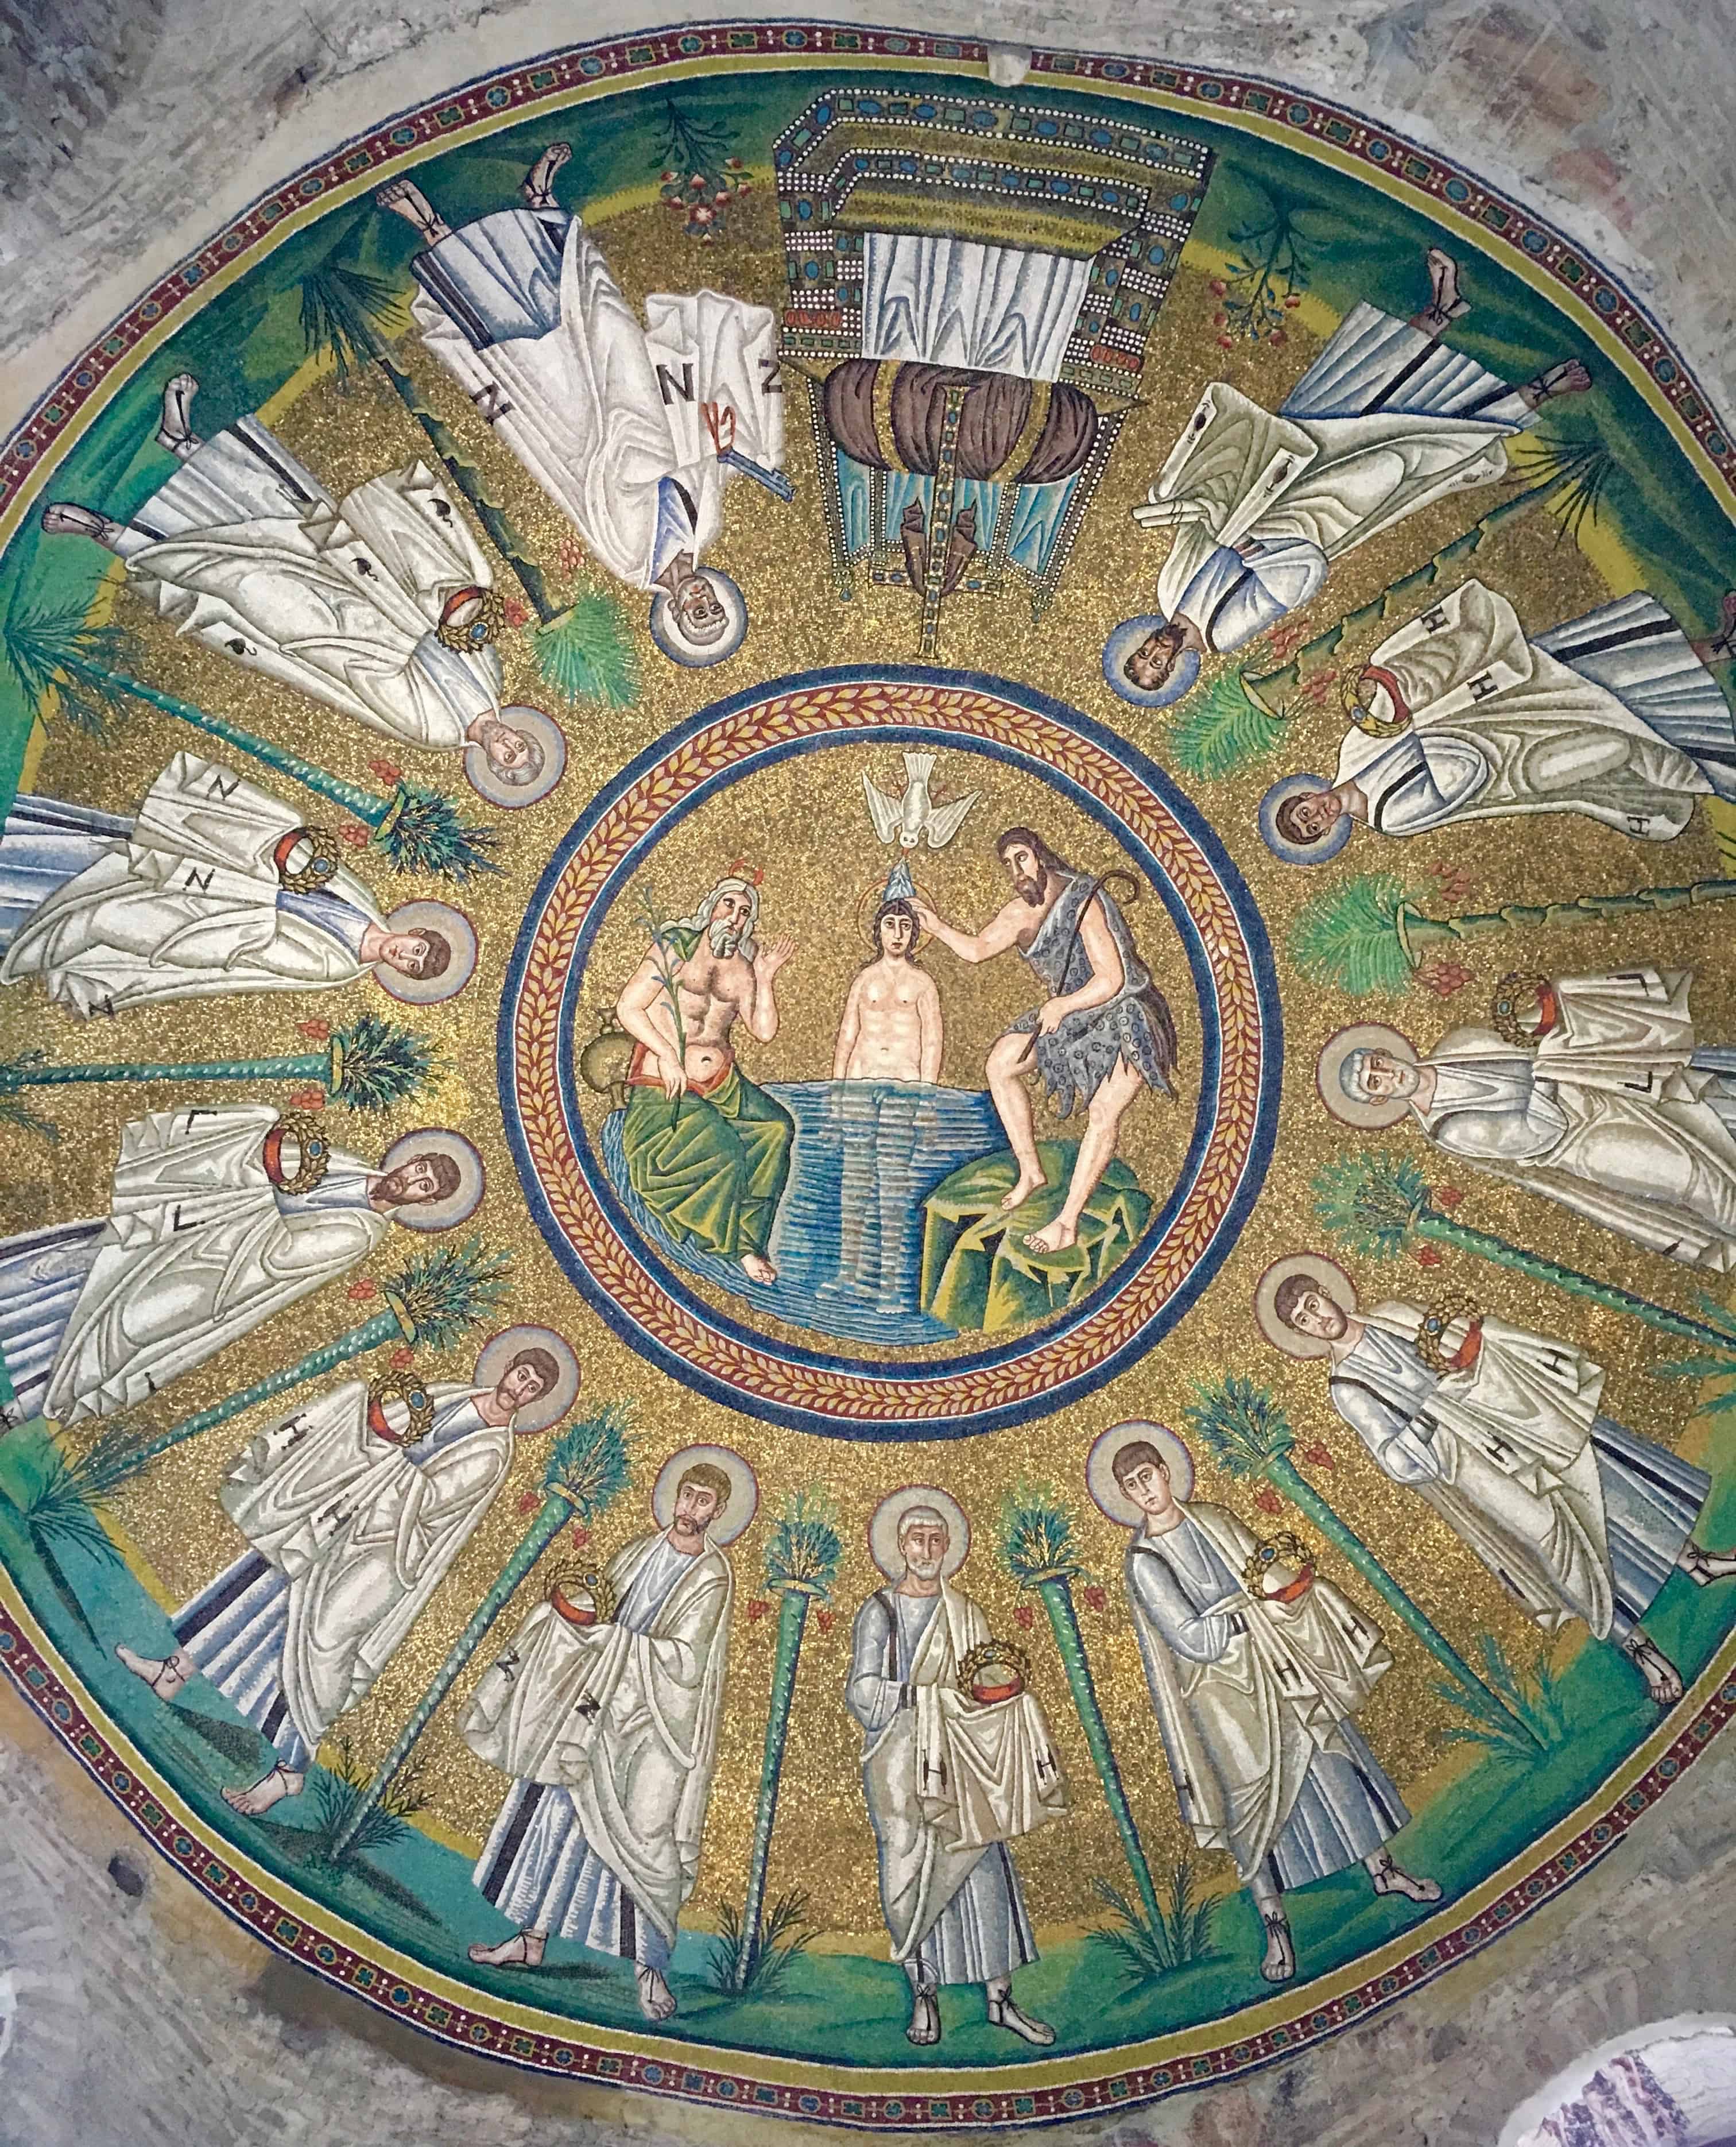 Startling mosaic ceiling in the Battistero degli Ariana, Ravenna, Italy